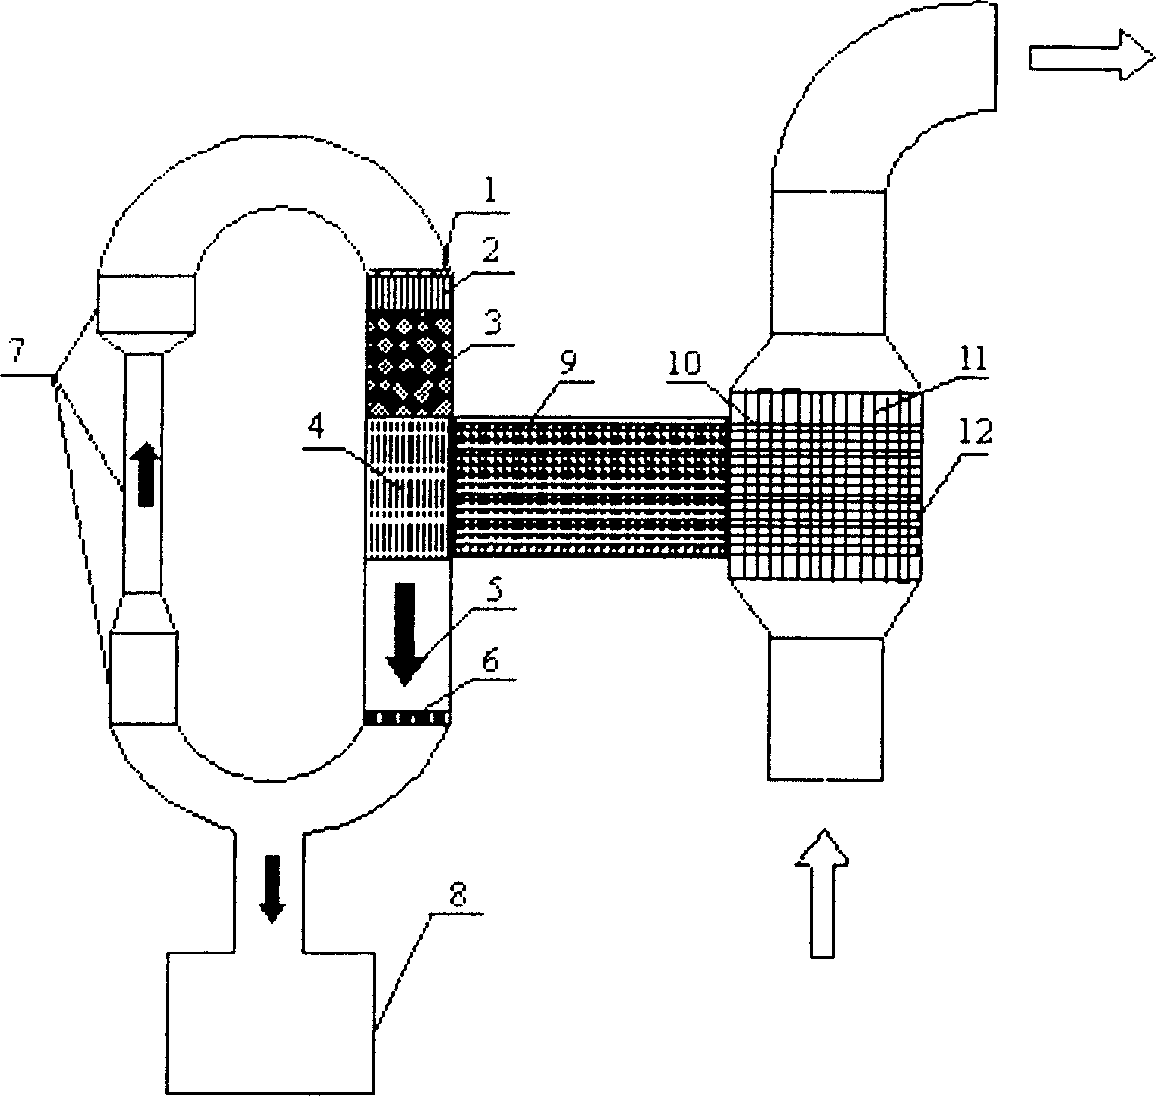 Heat-phonomotor driven by heat transfer through heat pipe